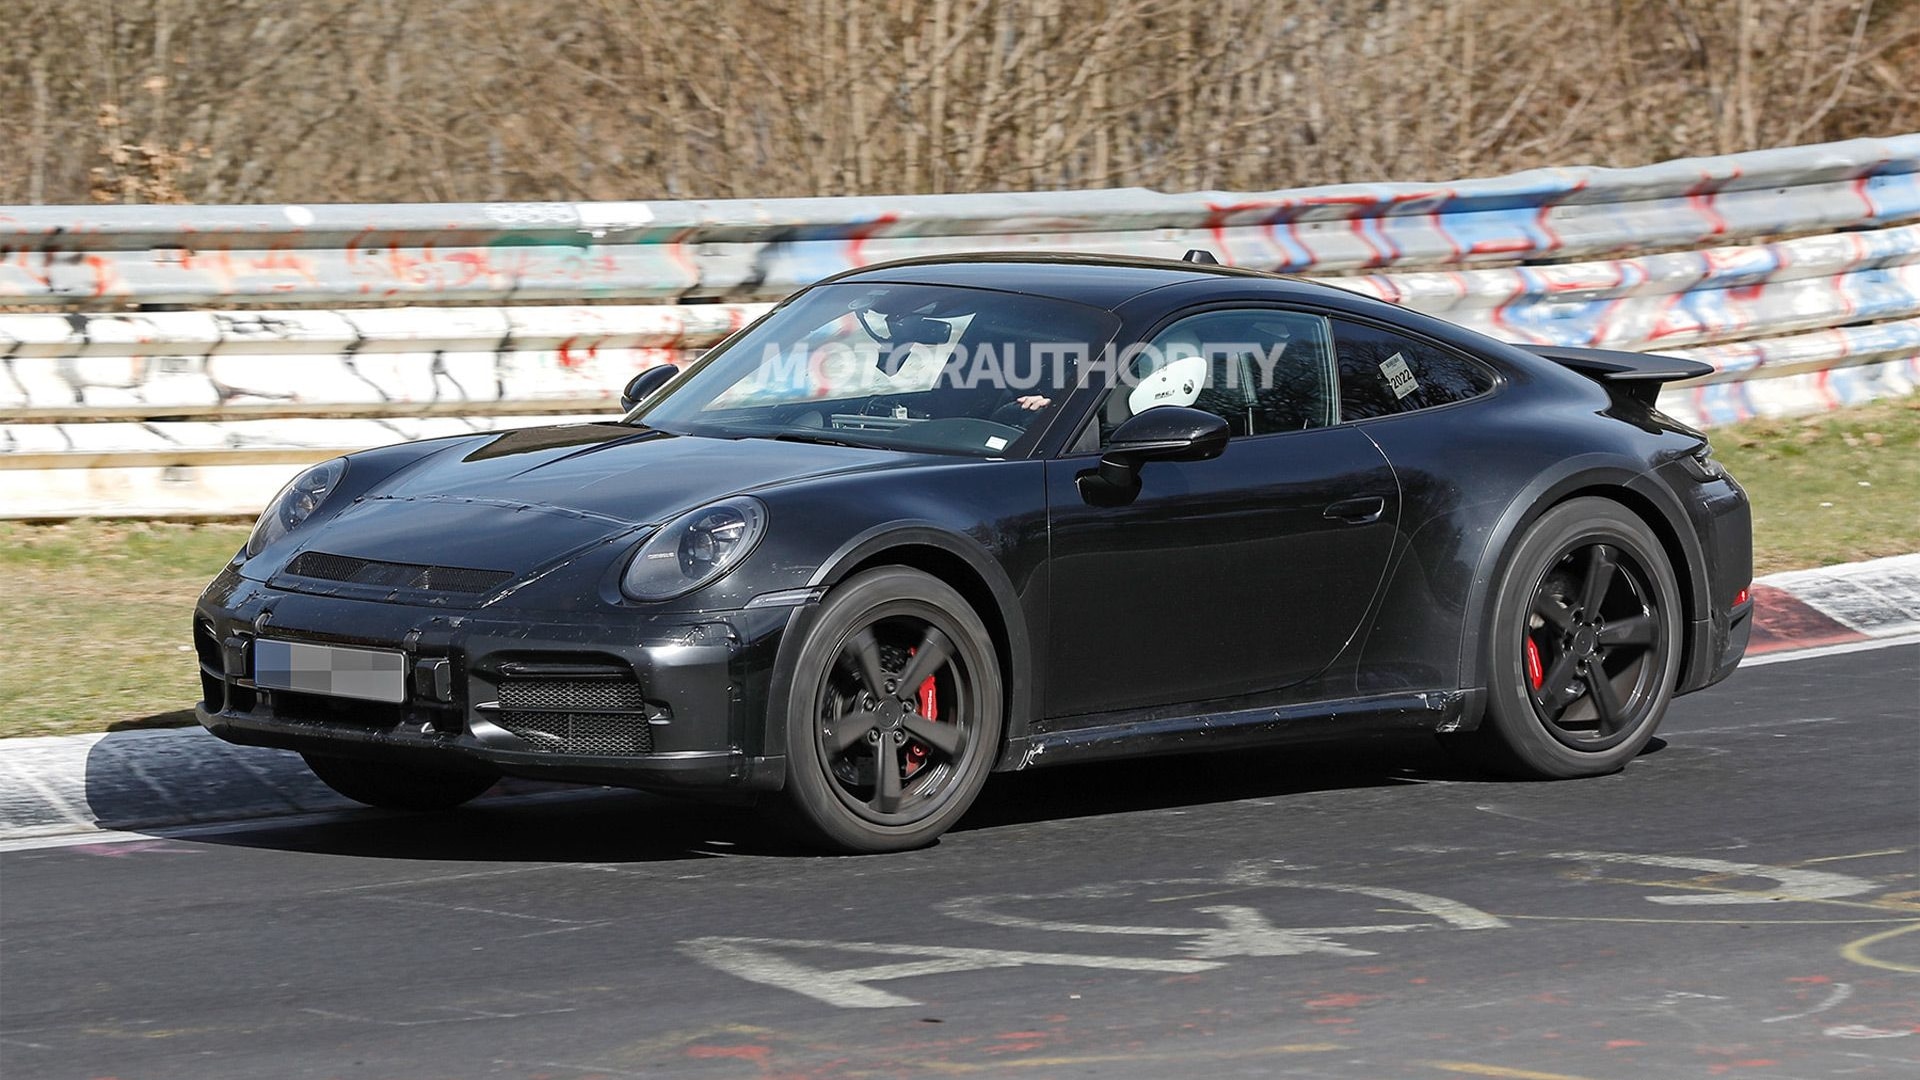 High-riding Porsche 911 prototype spy shots - Photo credit: S. Baldauf/SB-Medien